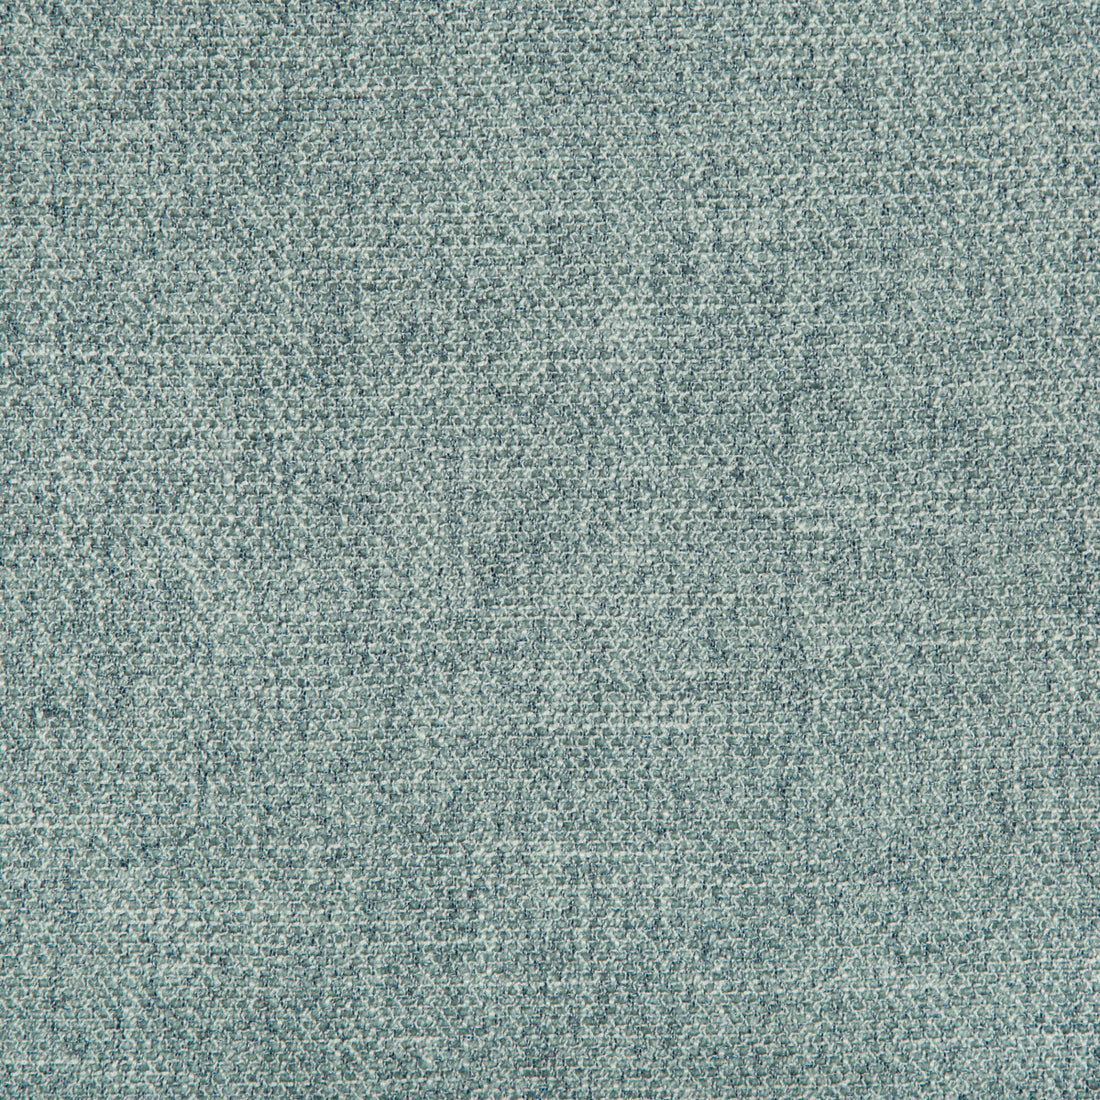 Kf Smt fabric - pattern 35060.15.0 - by Kravet Smart in the Performance Kravetarmor collection